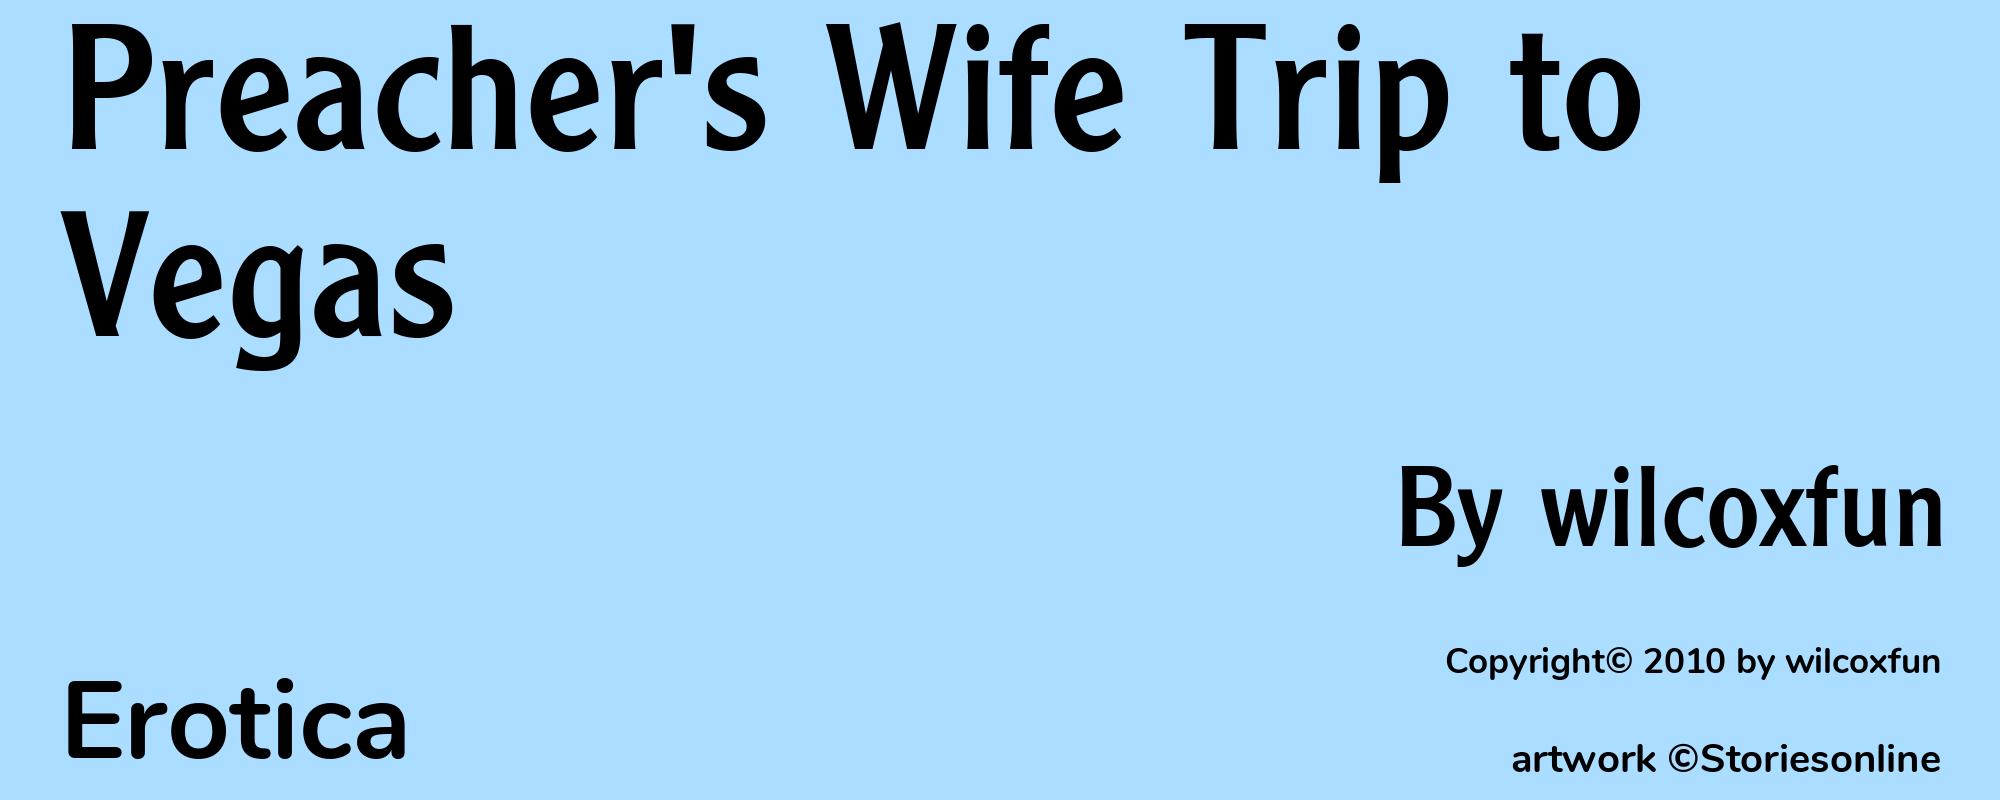 Preacher's Wife Trip to Vegas - Cover